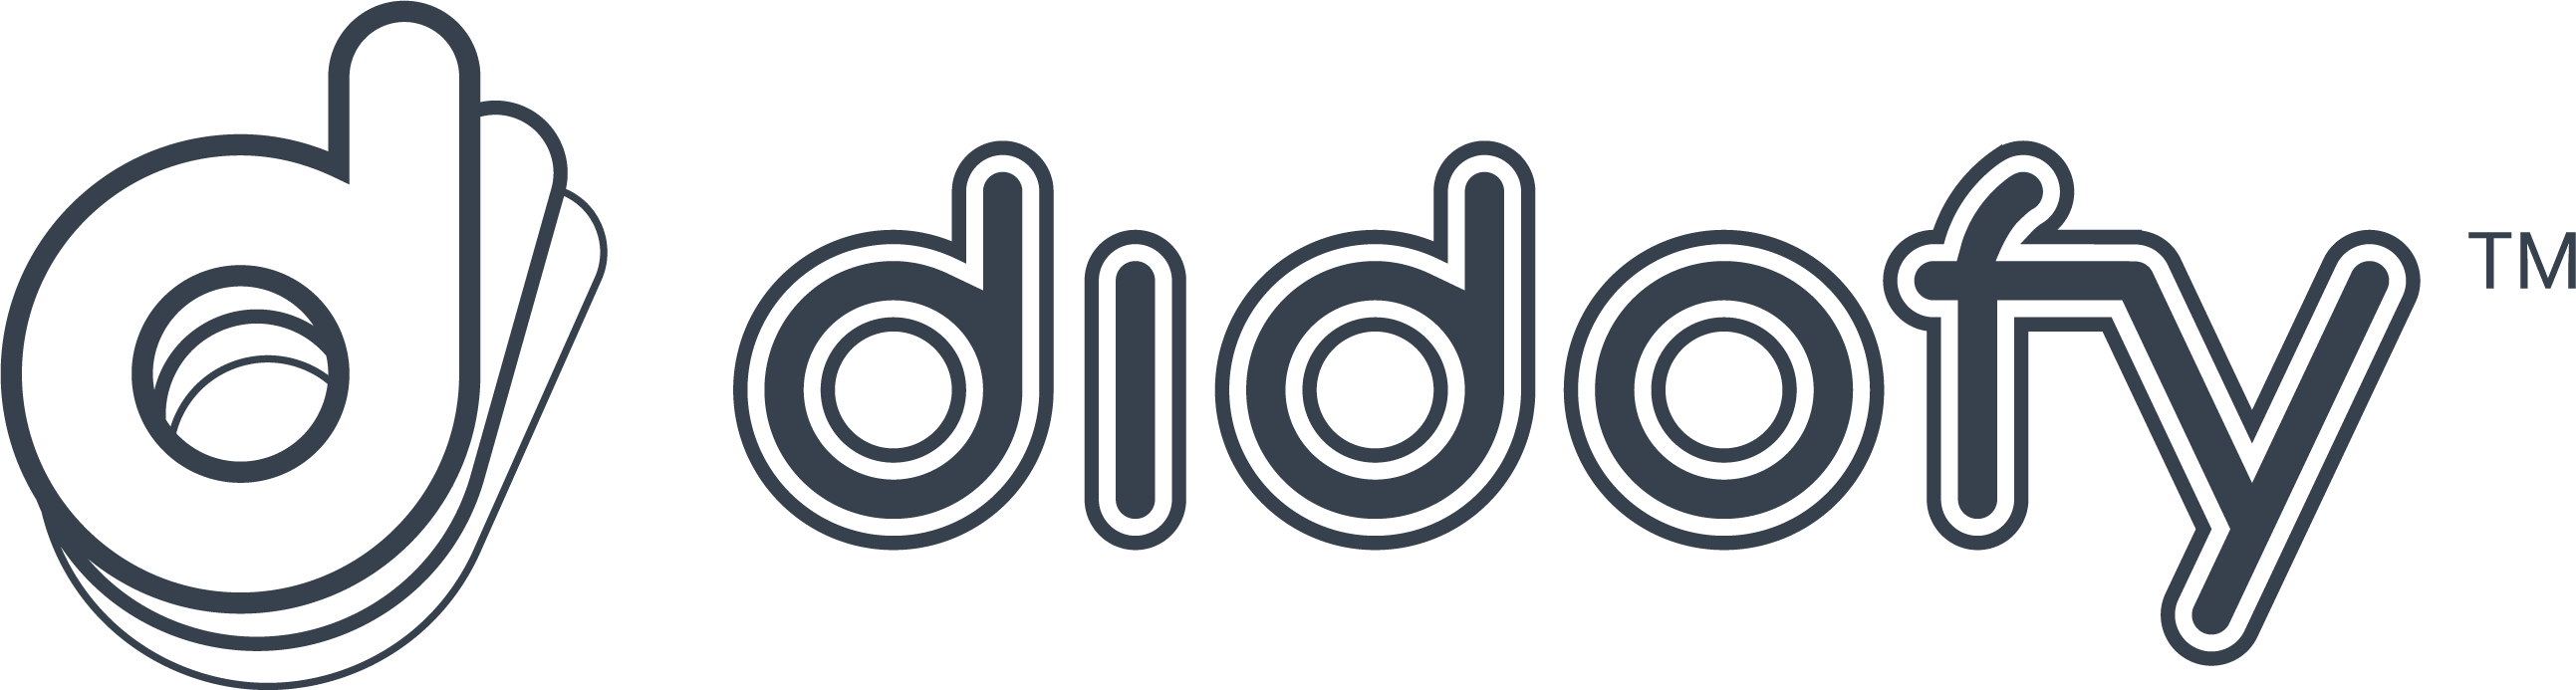 didofy logo